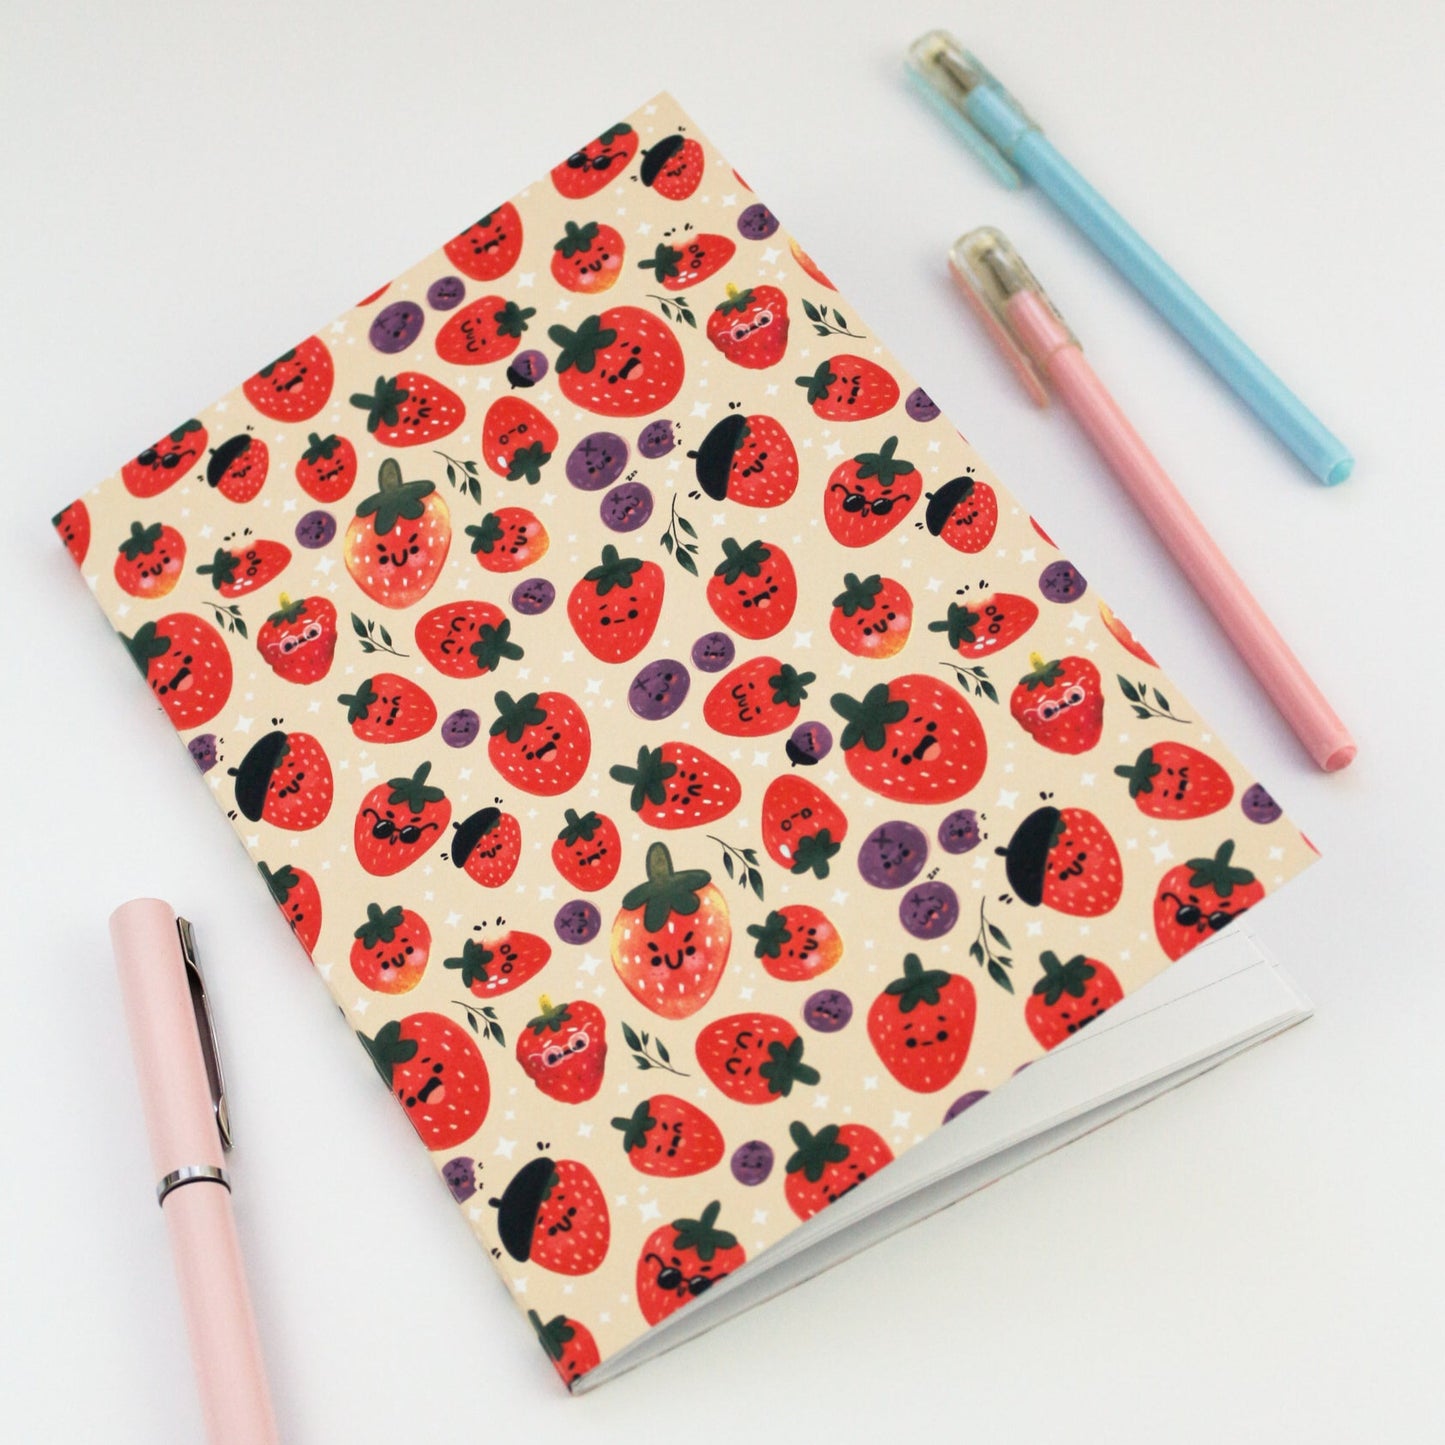 Strawberry & Blueberry notebook - Summer Stationery gift